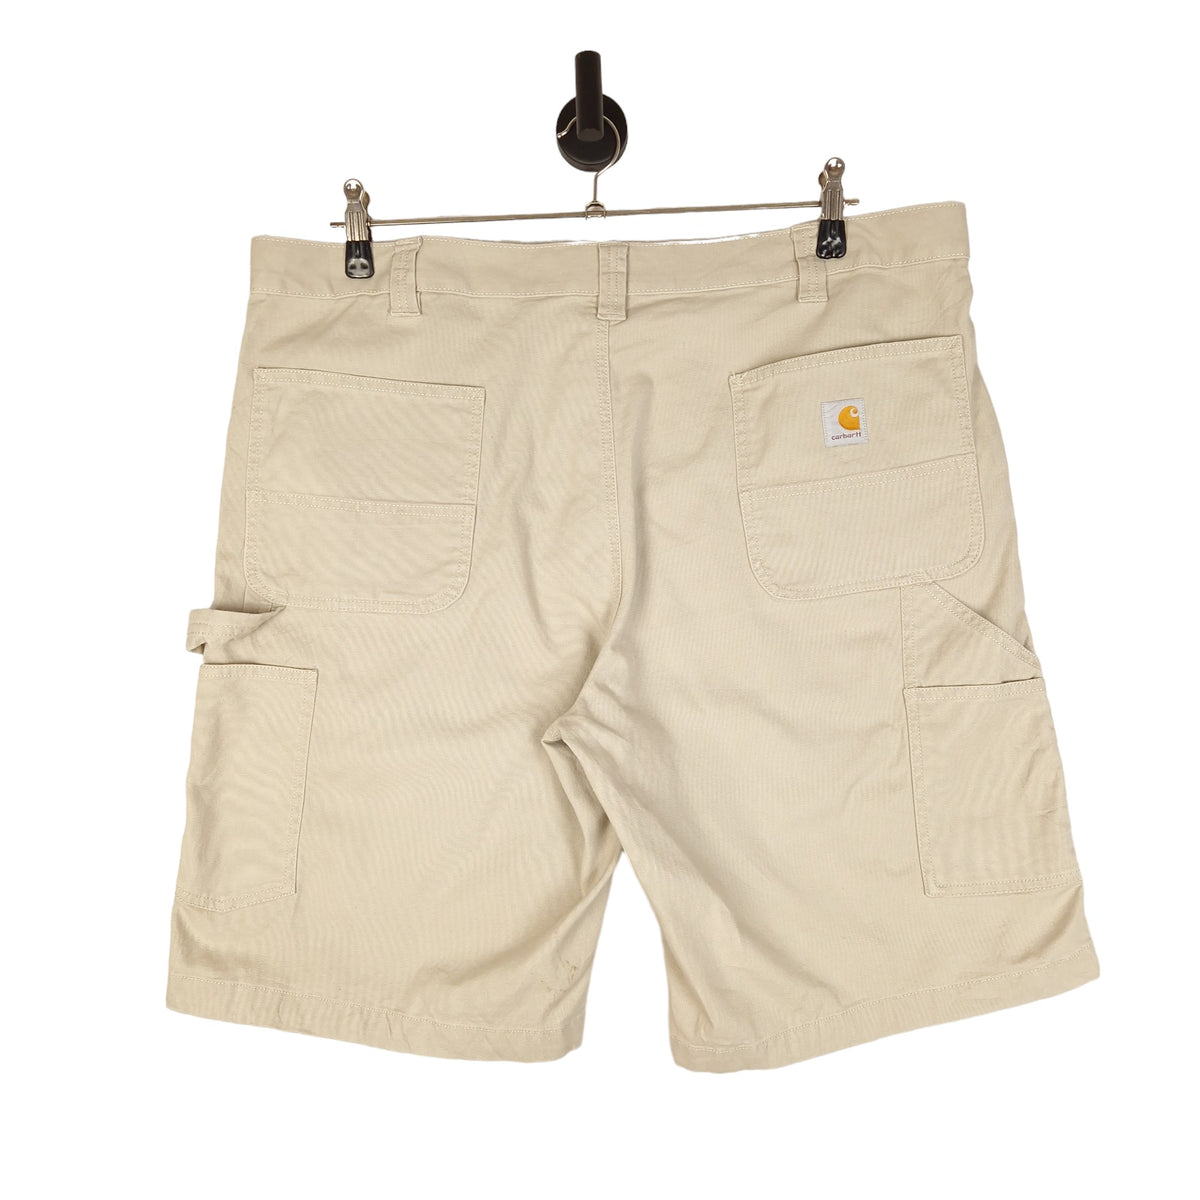 Carhartt Carpenter Shorts - Size W42